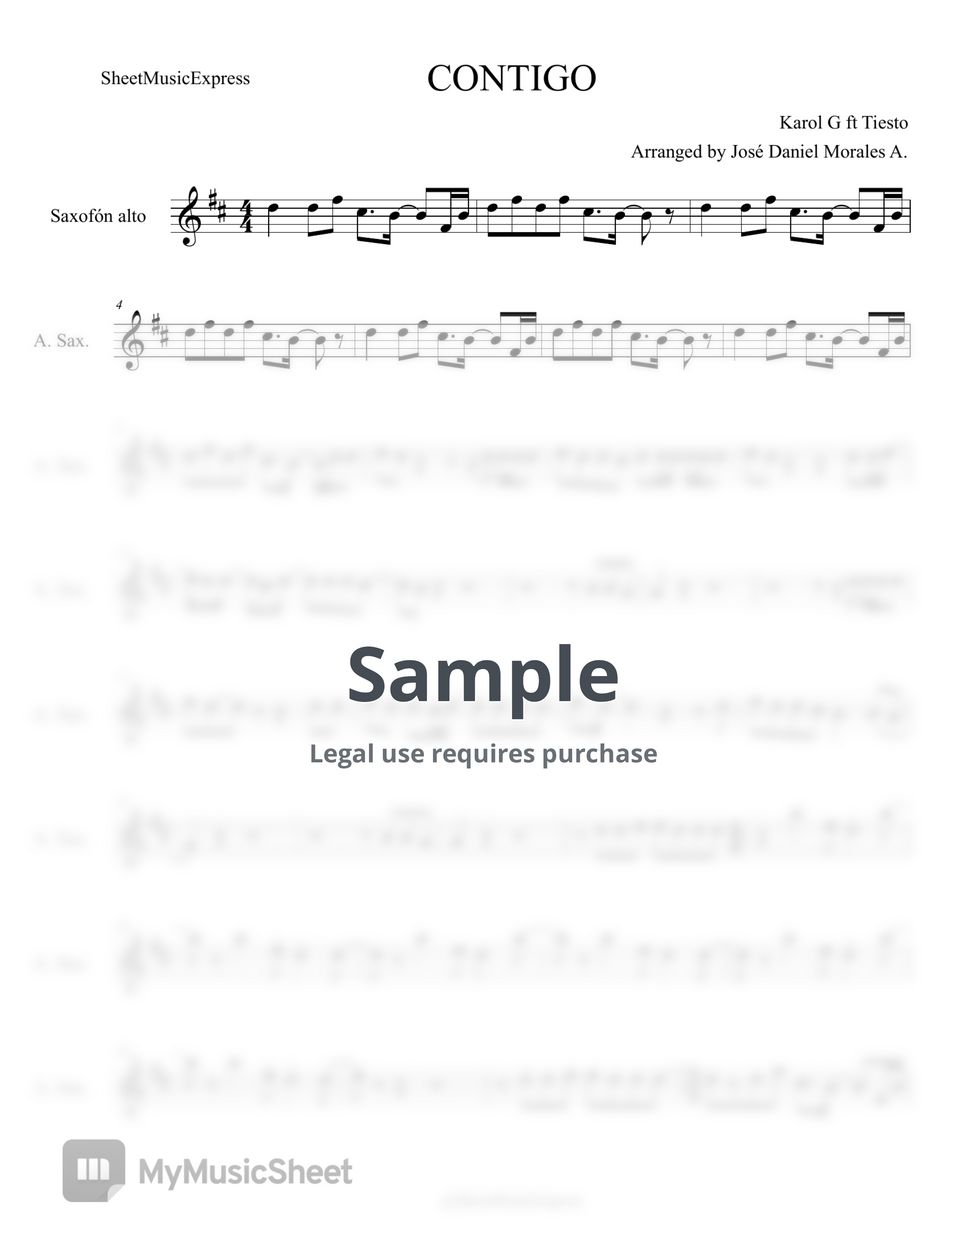 Karol G - Contigo Karol G Tiesto Sheet Music Alto Sax (Latin) by Sheet Music Express